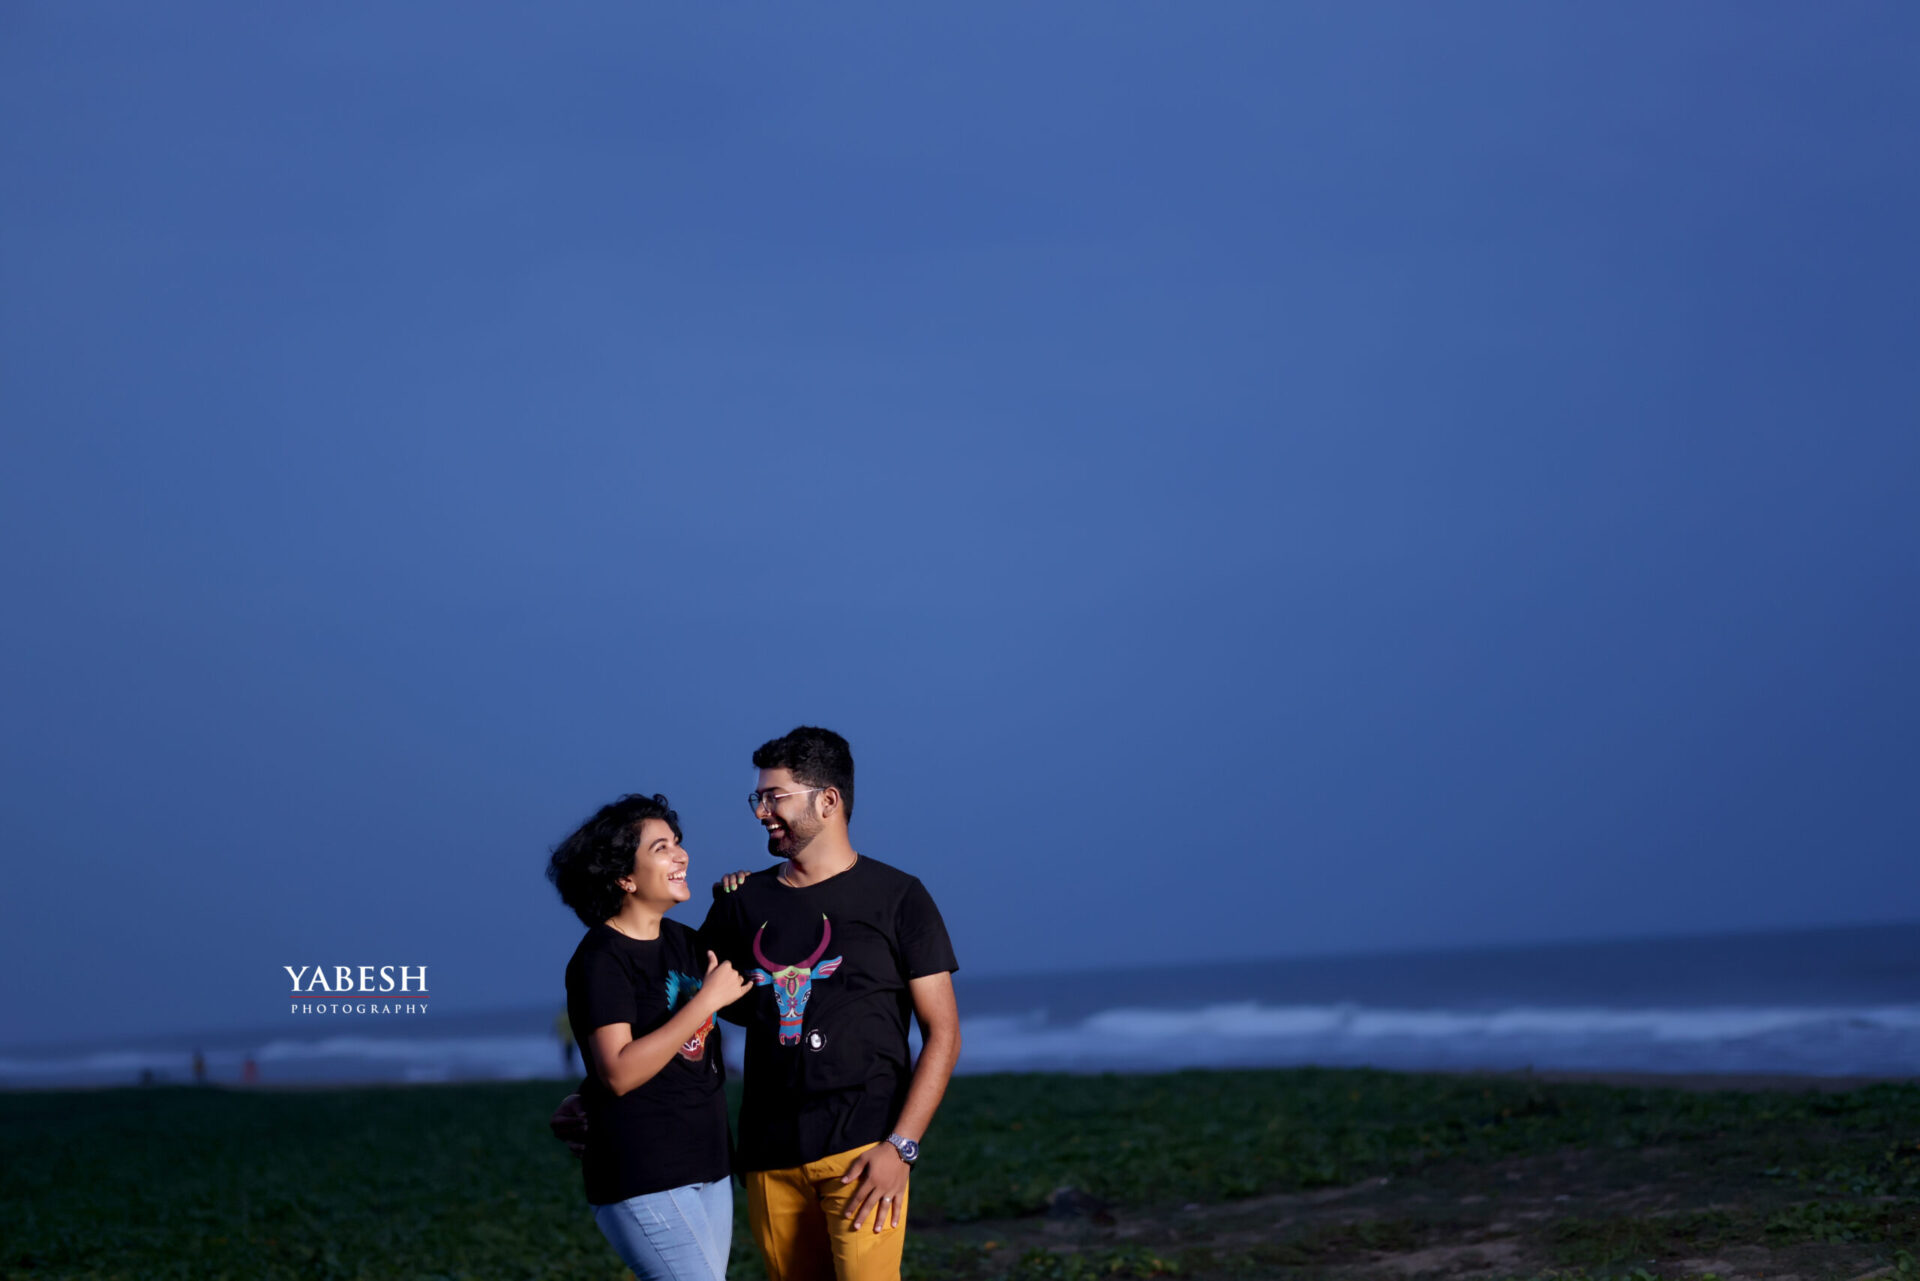 Beach pre-wedding photoshoot ideas for couples||beach couple photo poses  ideas|| beach (part-1) - YouTube